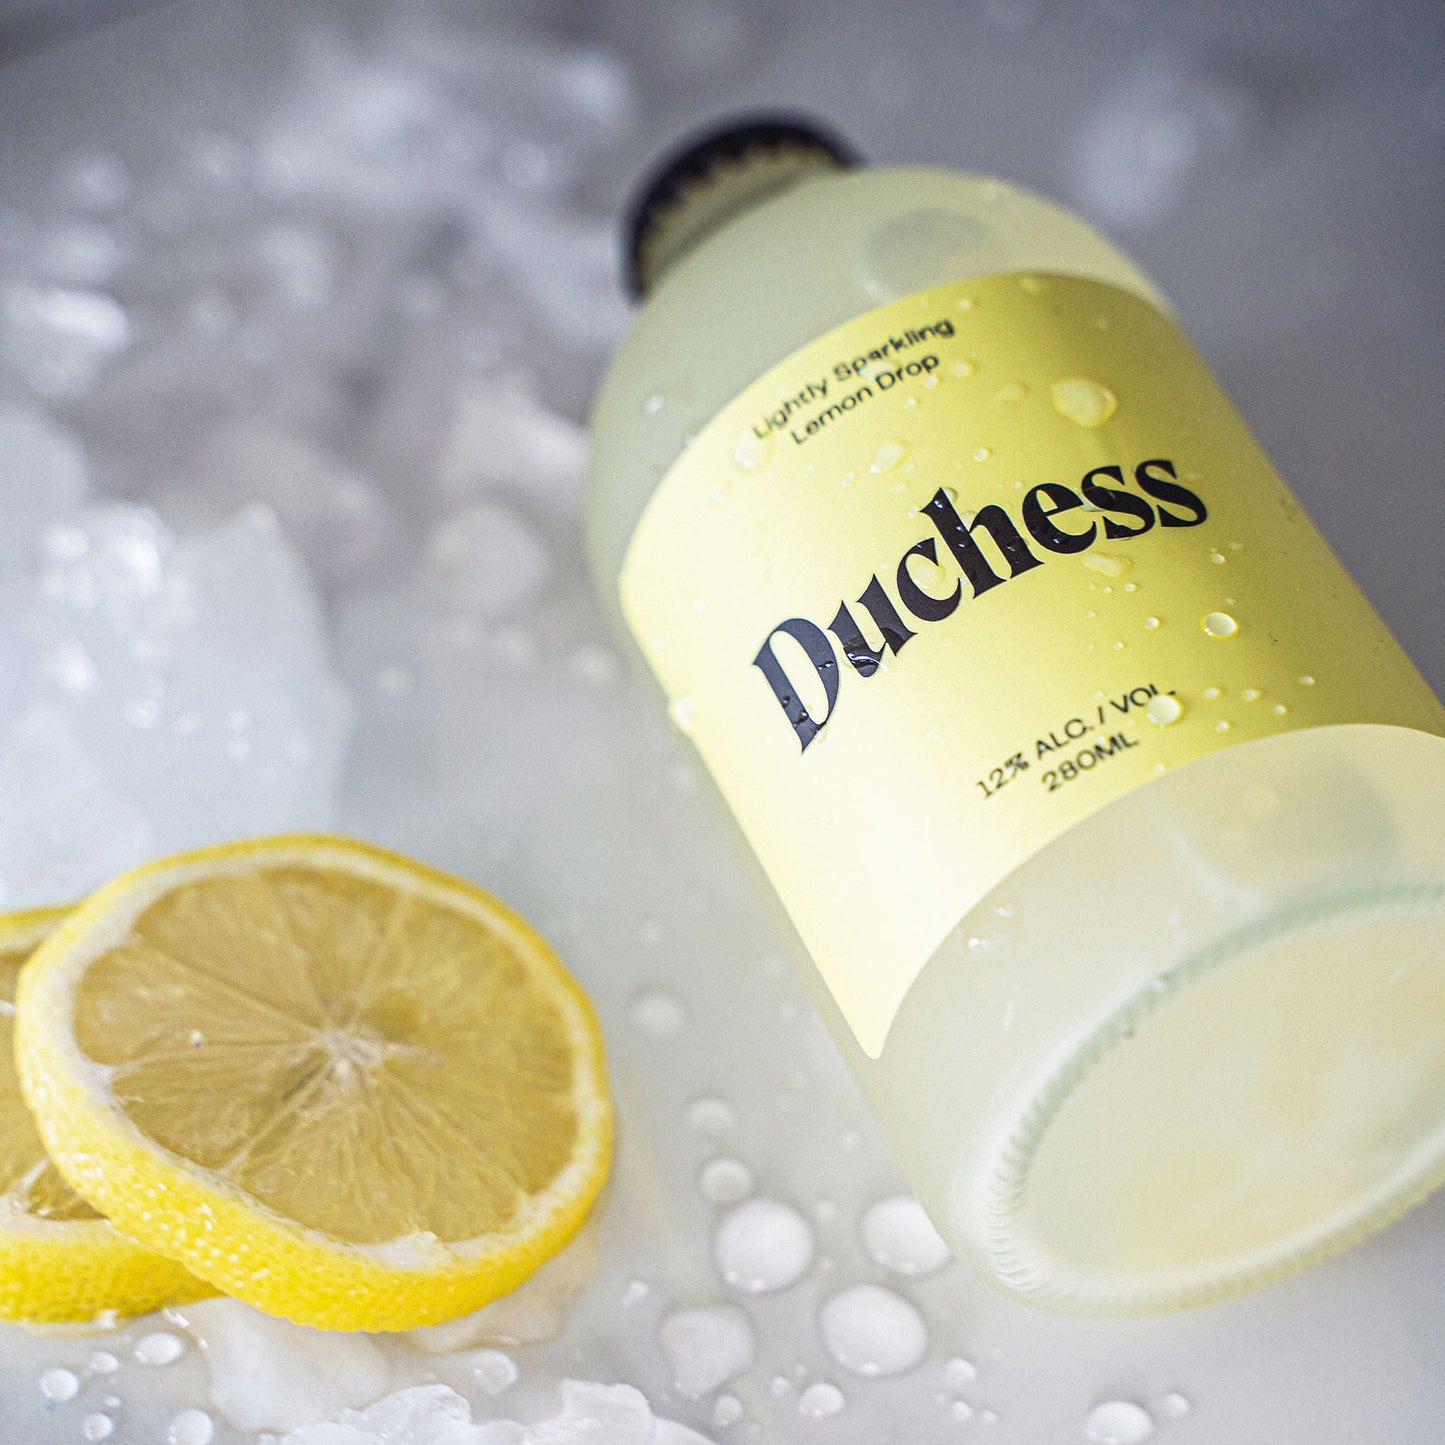 Duchess Lemon Drop